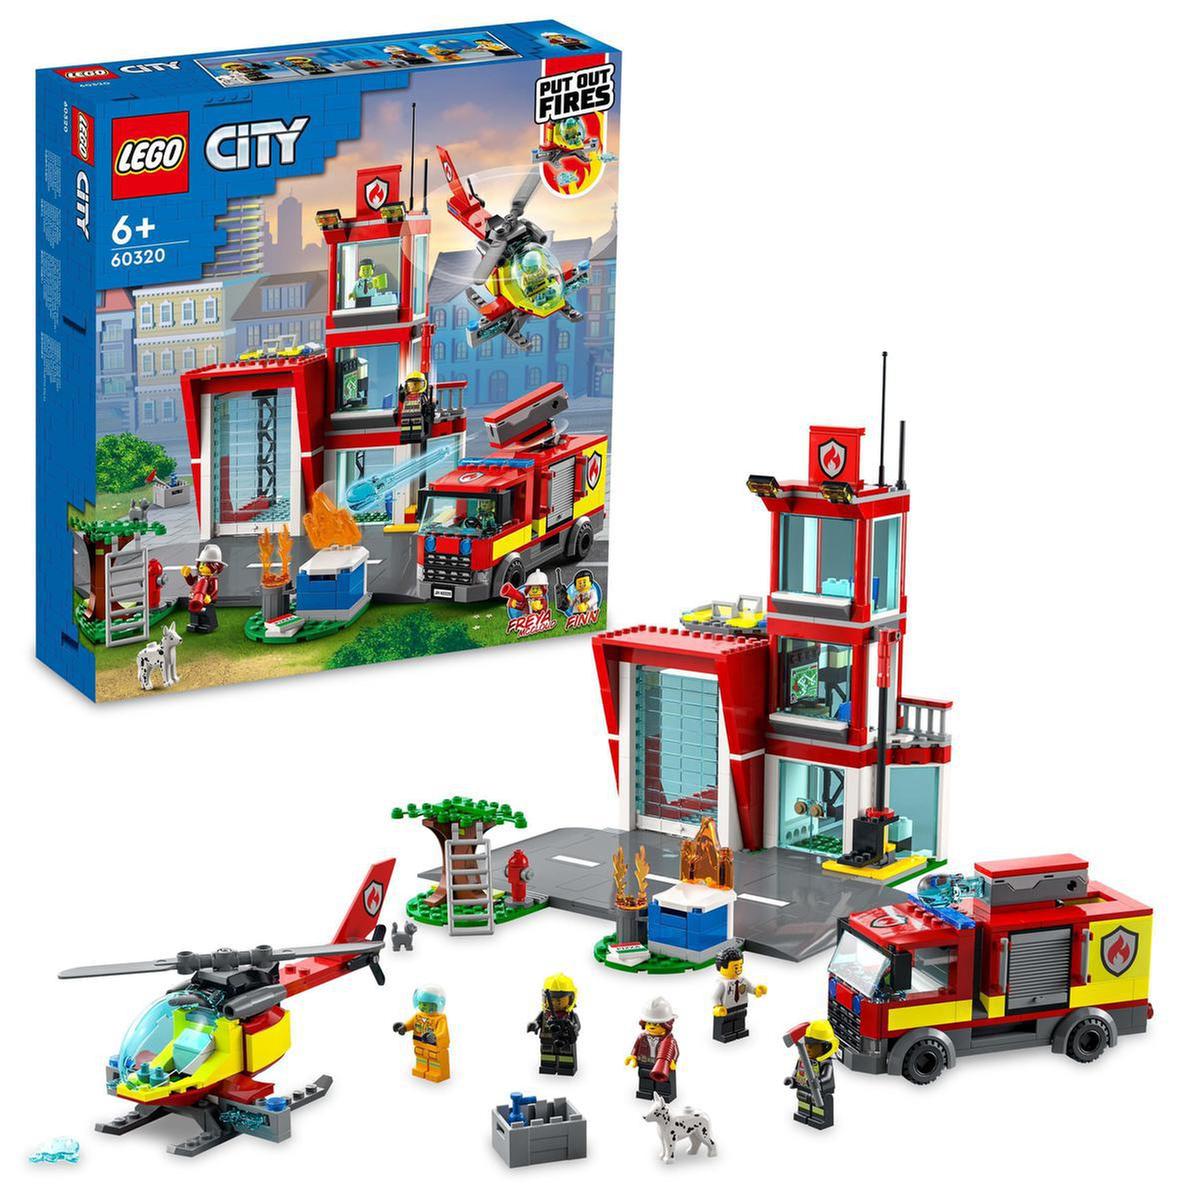 LEGO City - Parque de bomberos - 60320 | Lego City | Toys"R"Us España